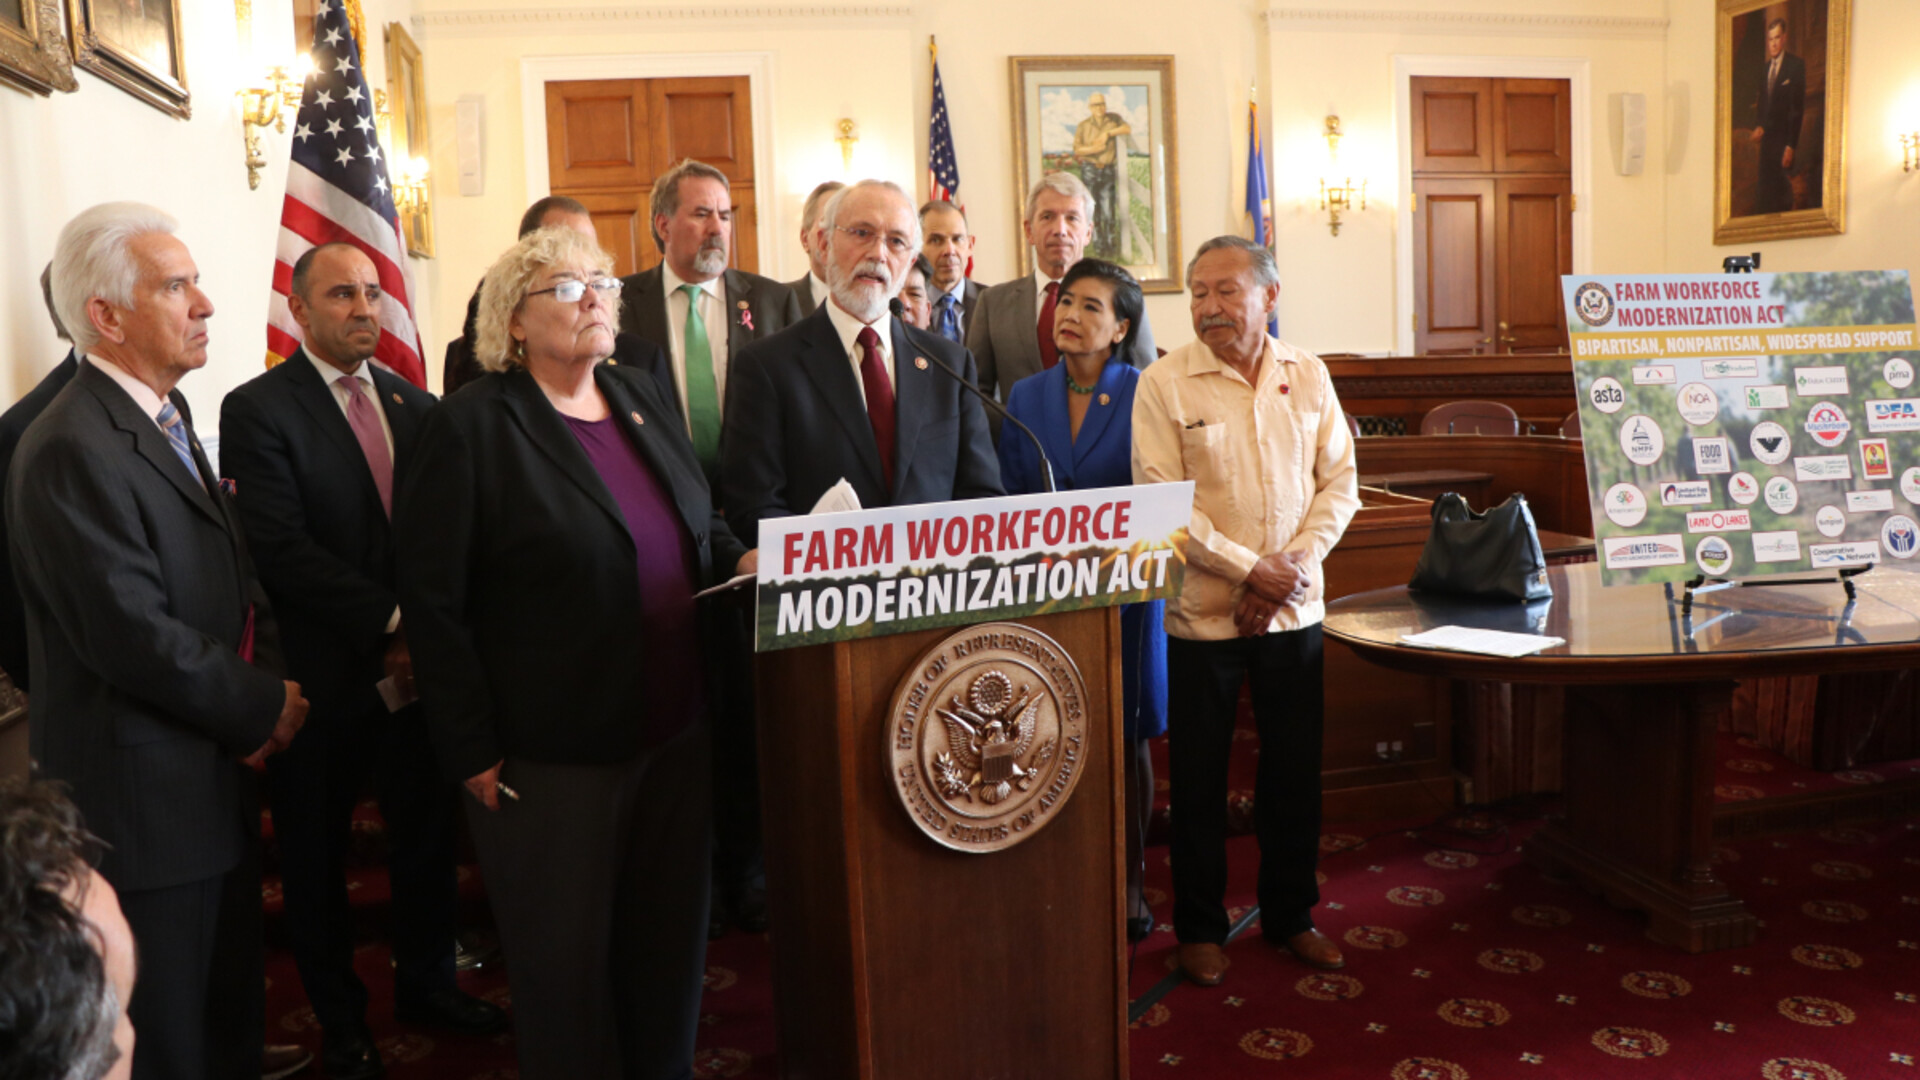 Farm Workforce Modernization Act Updt Pt 1